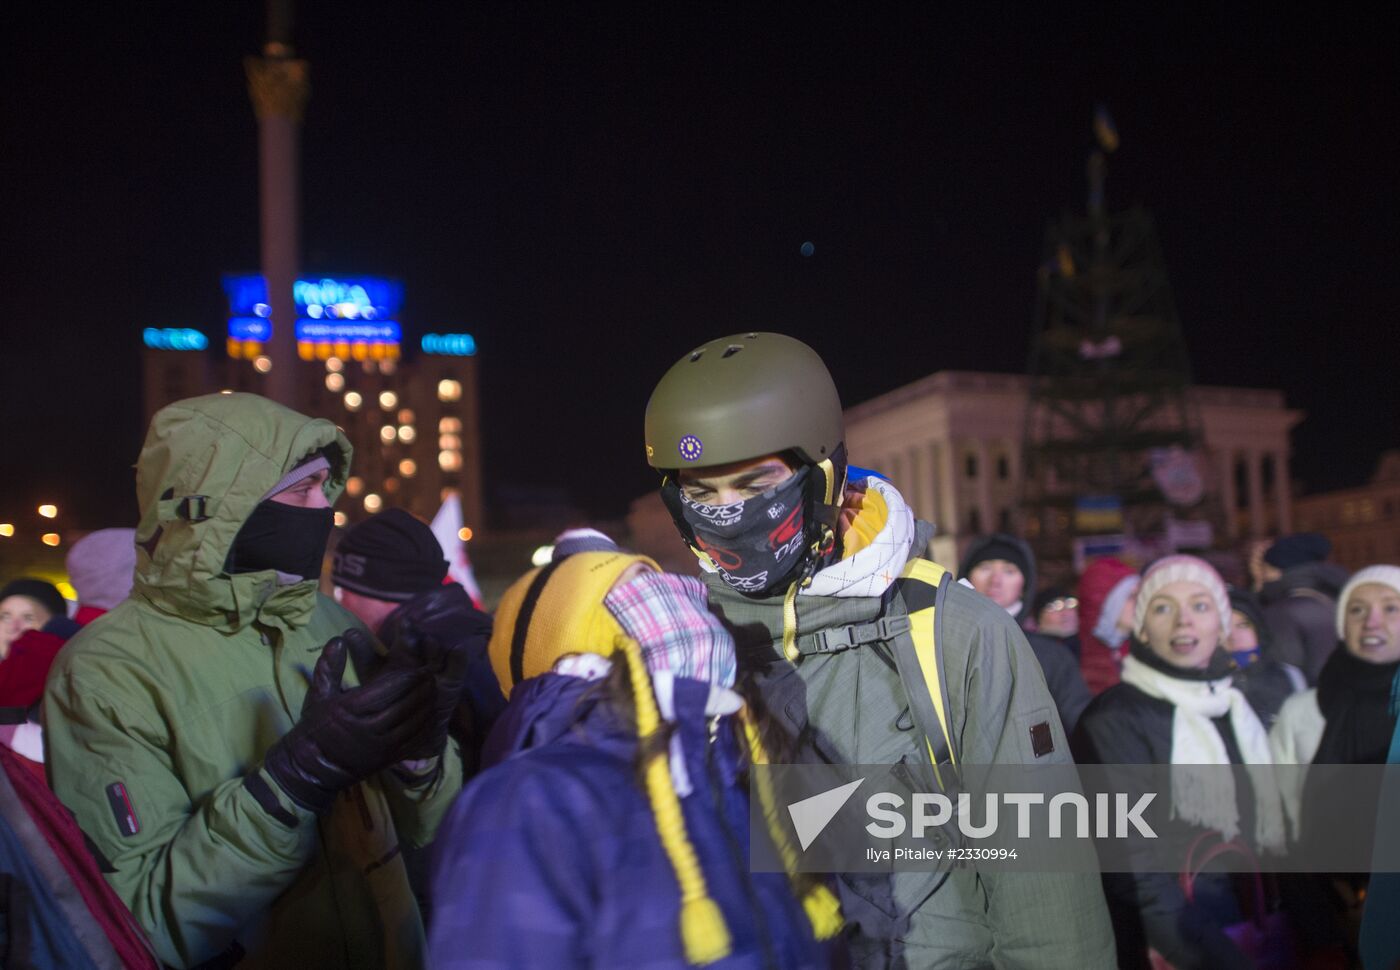 Supporters of Ukraine's EU integration rally in Kiev